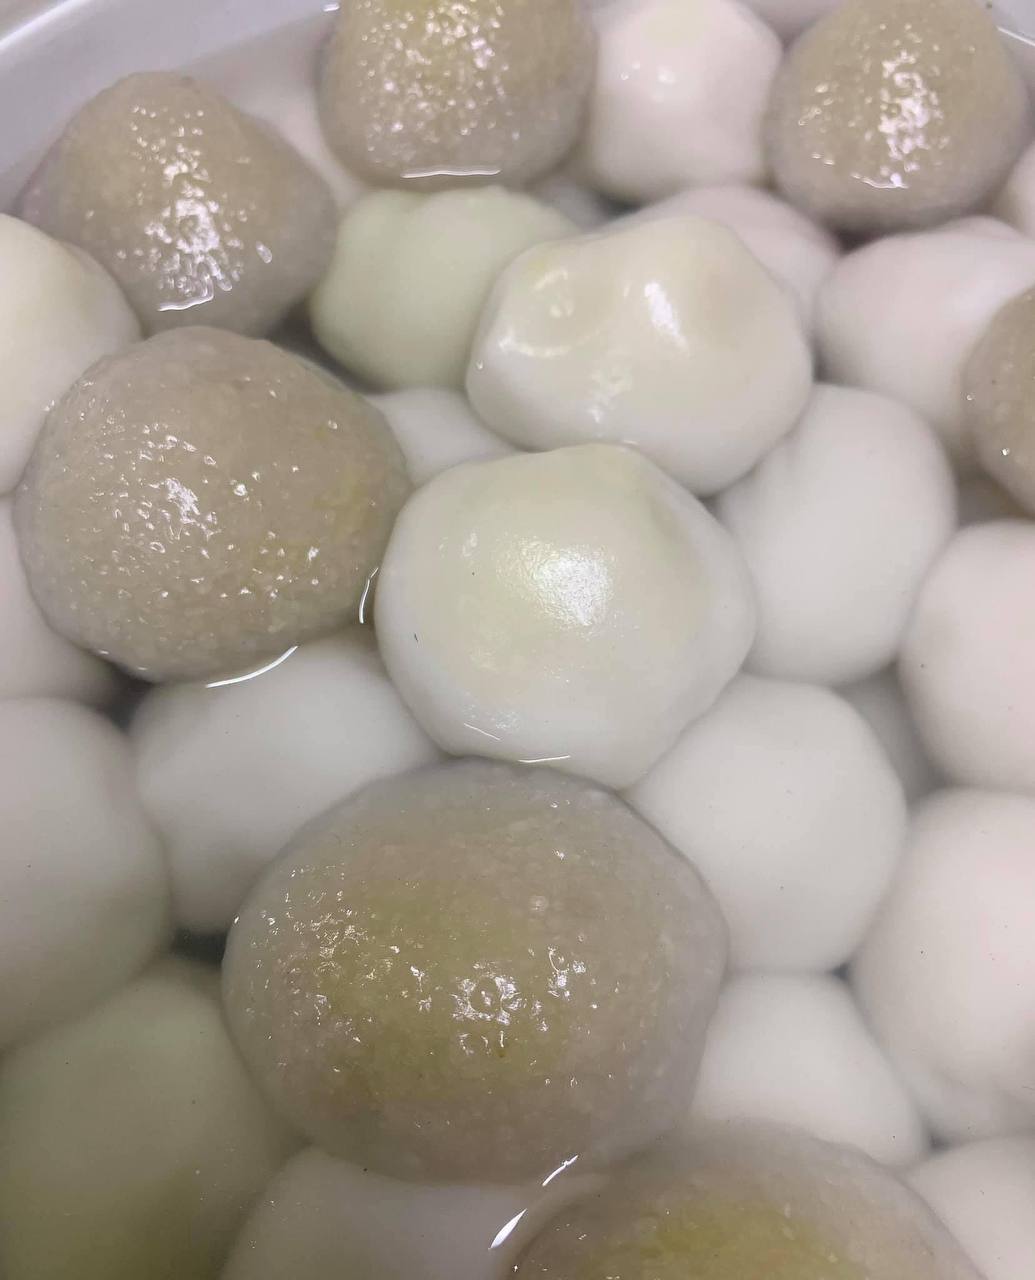 36. Khmer Dessert Glutinous Rice Balls With Mung Beans Paste